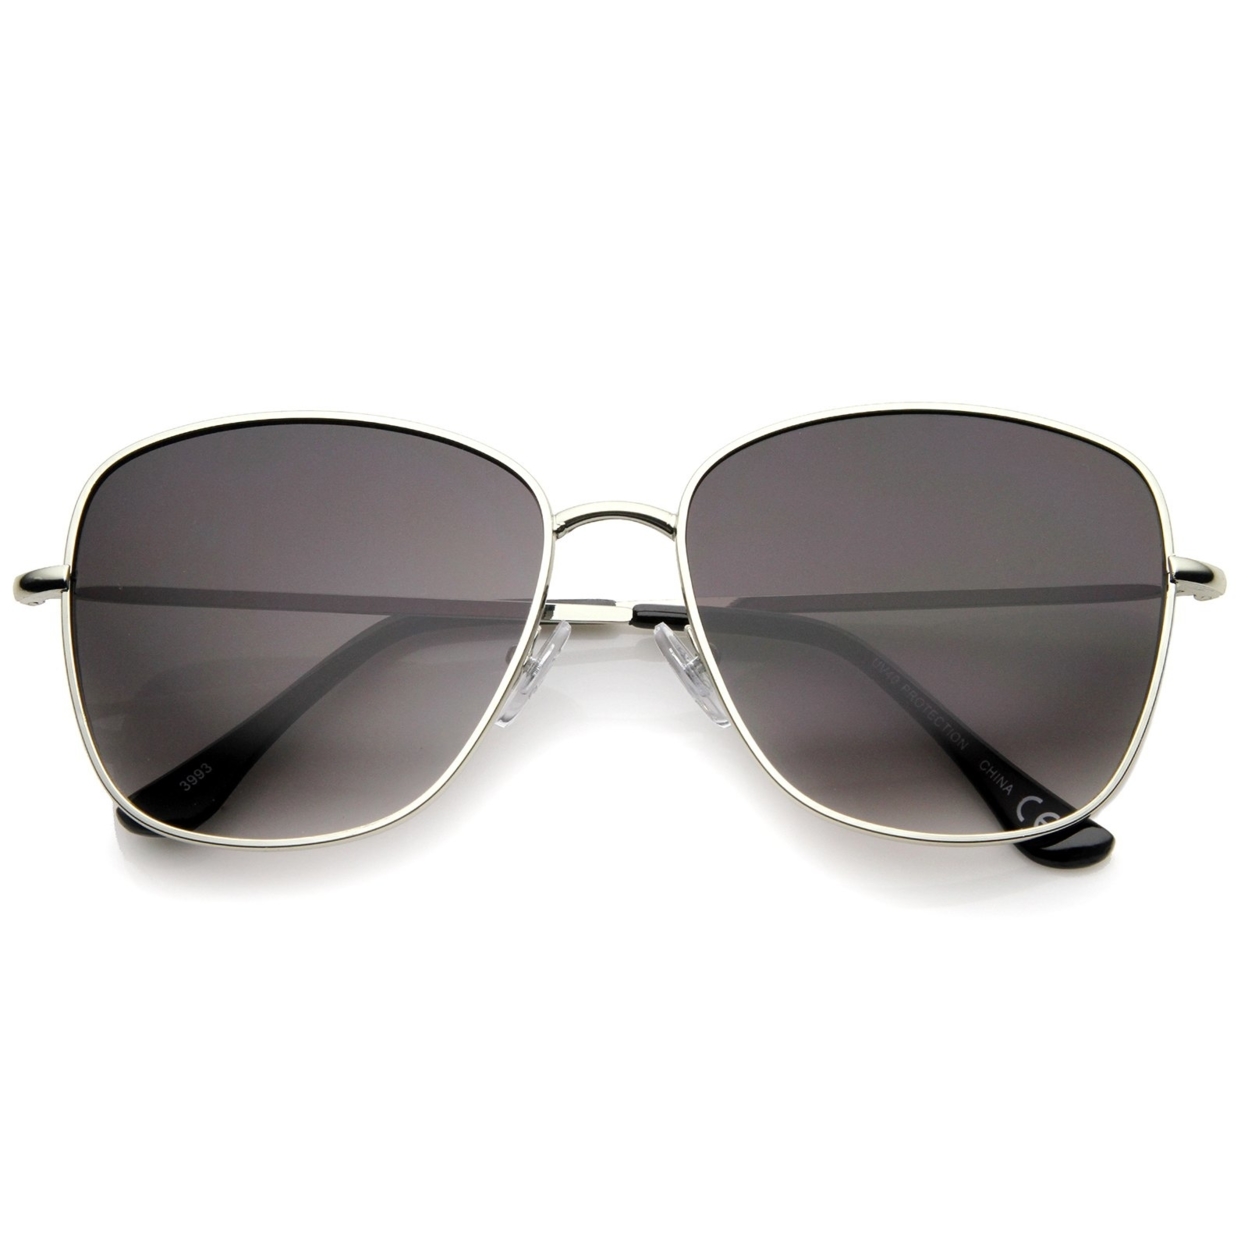 Contemporary Modern Fashion Full Metal Slim Temple Square Sunglasses 57mm - Shiny Gold / Amber